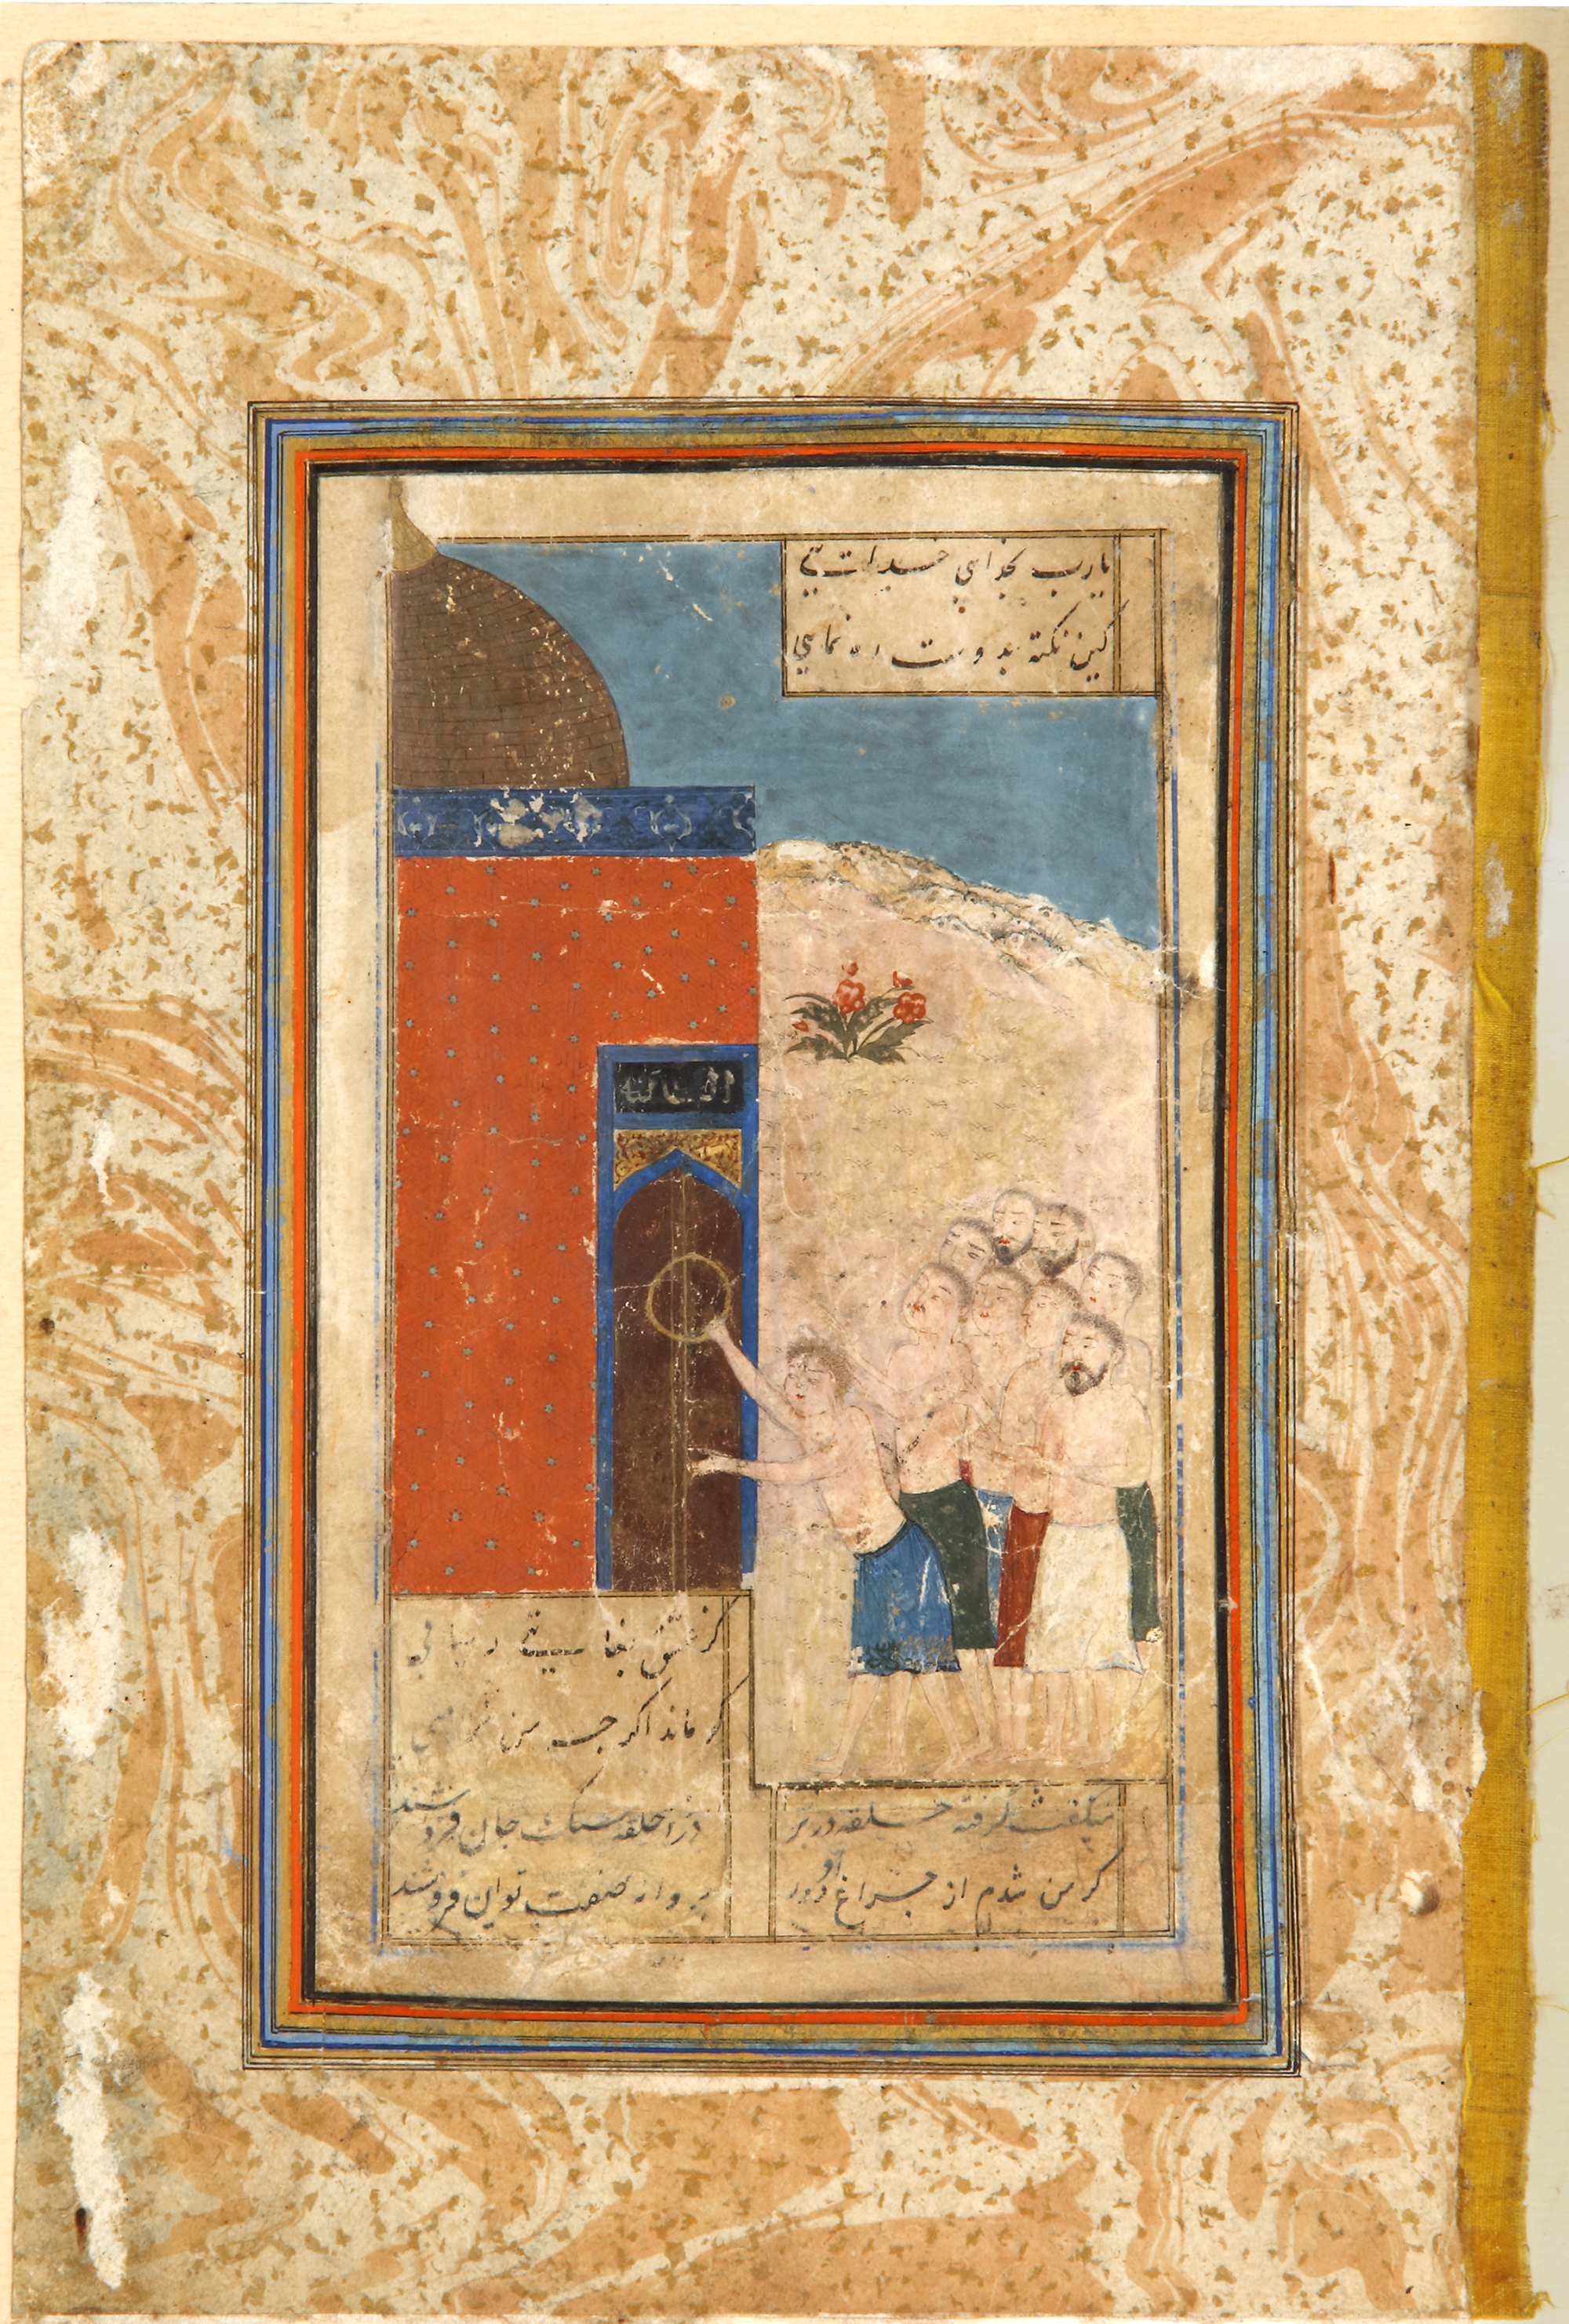 MAJNUN AT A SHRINE, PERSIA, SAFAVID, 16TH CENTURY - Image 2 of 2